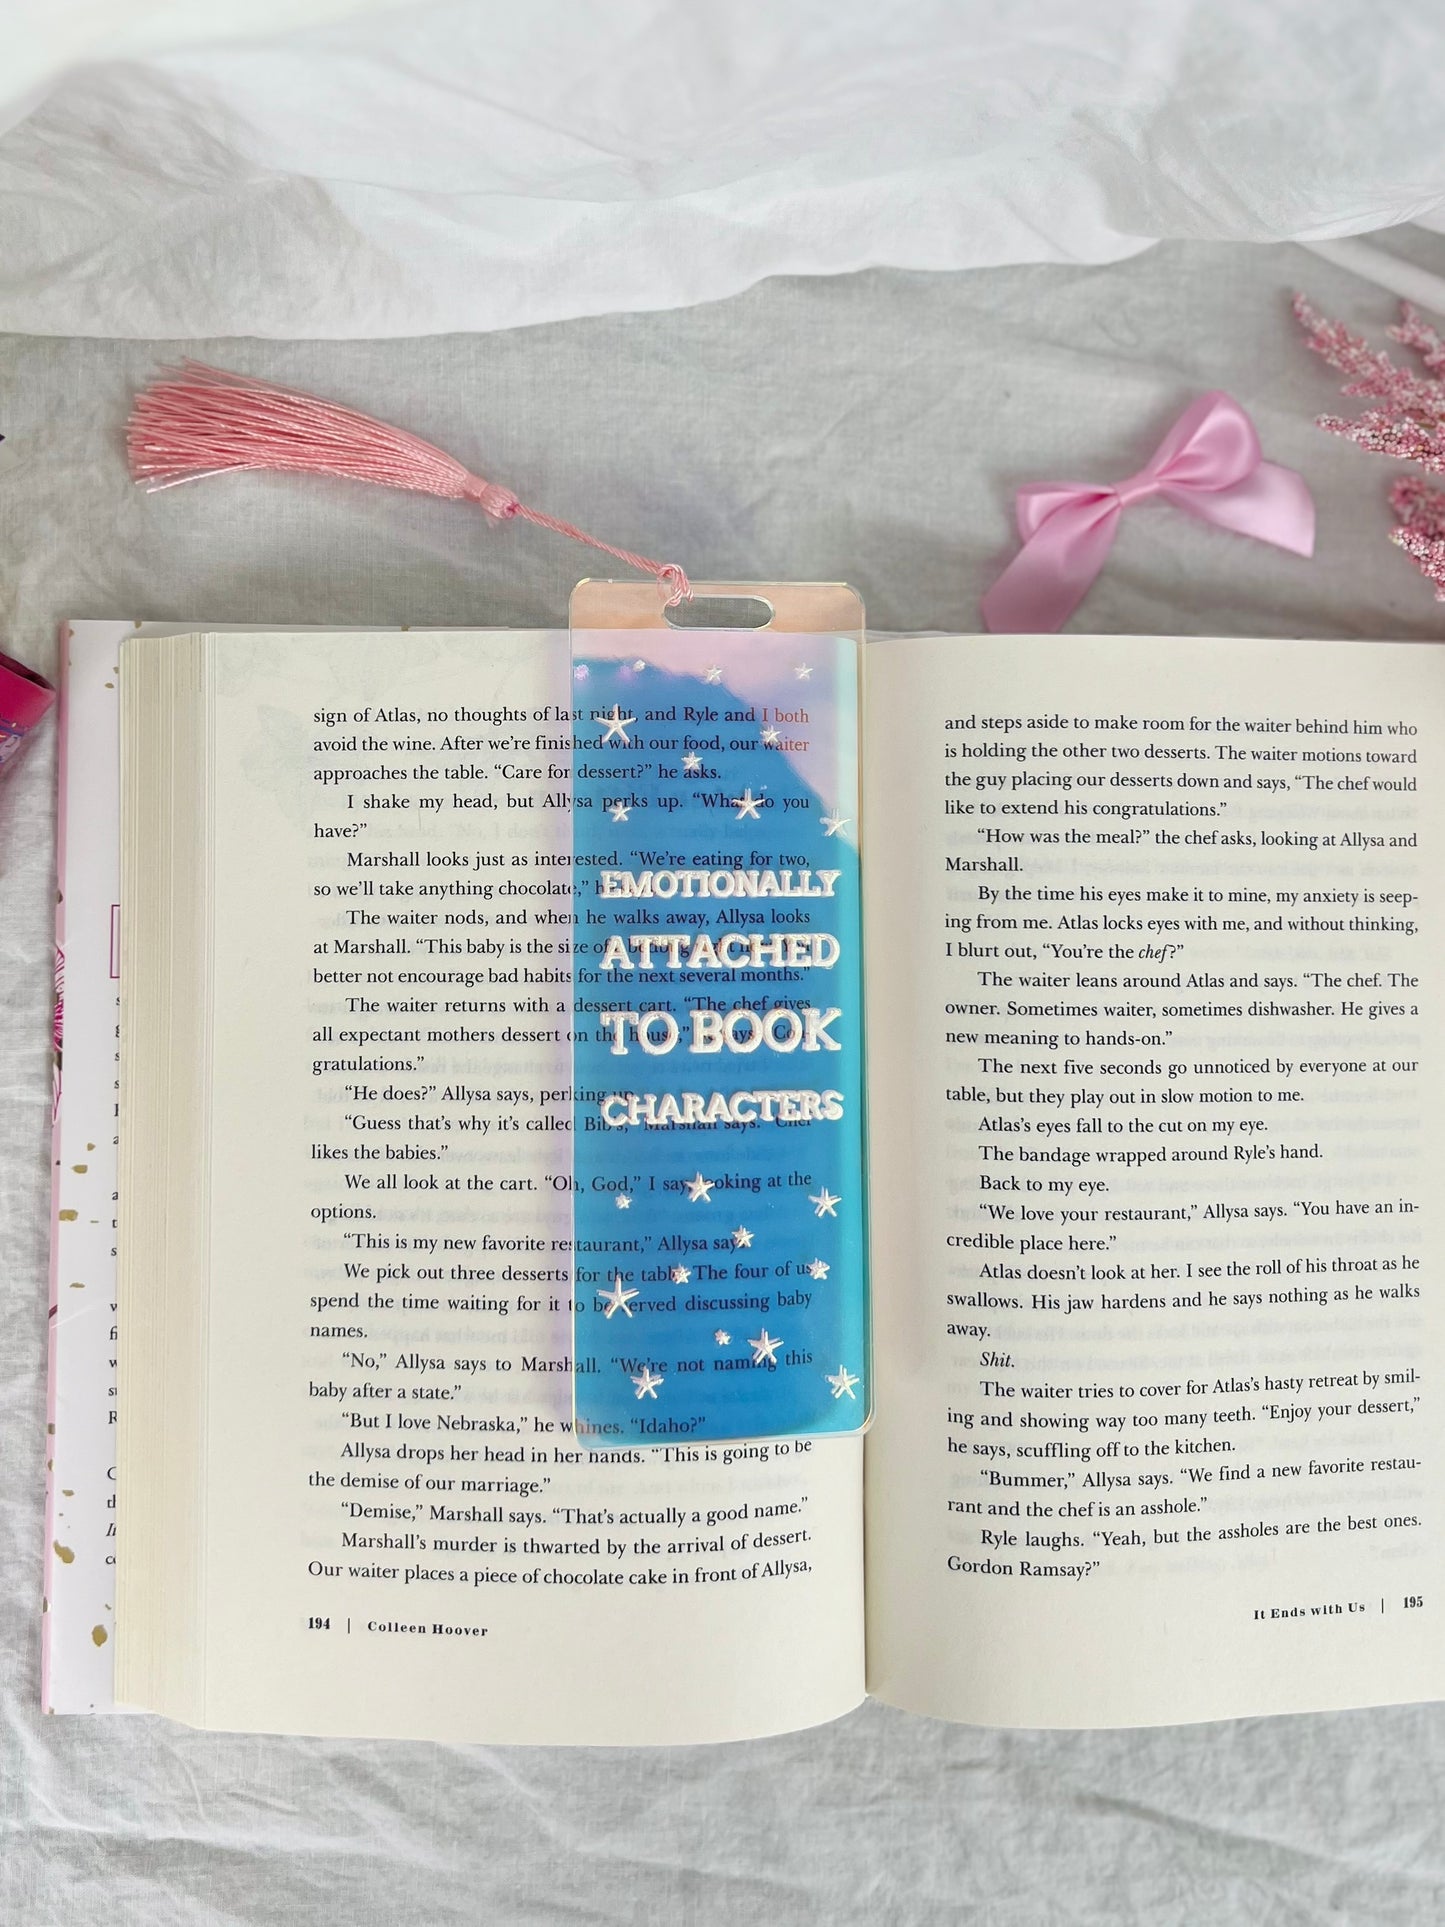 'Emotionally Attached' | Iridescent Acrylic Bookmark